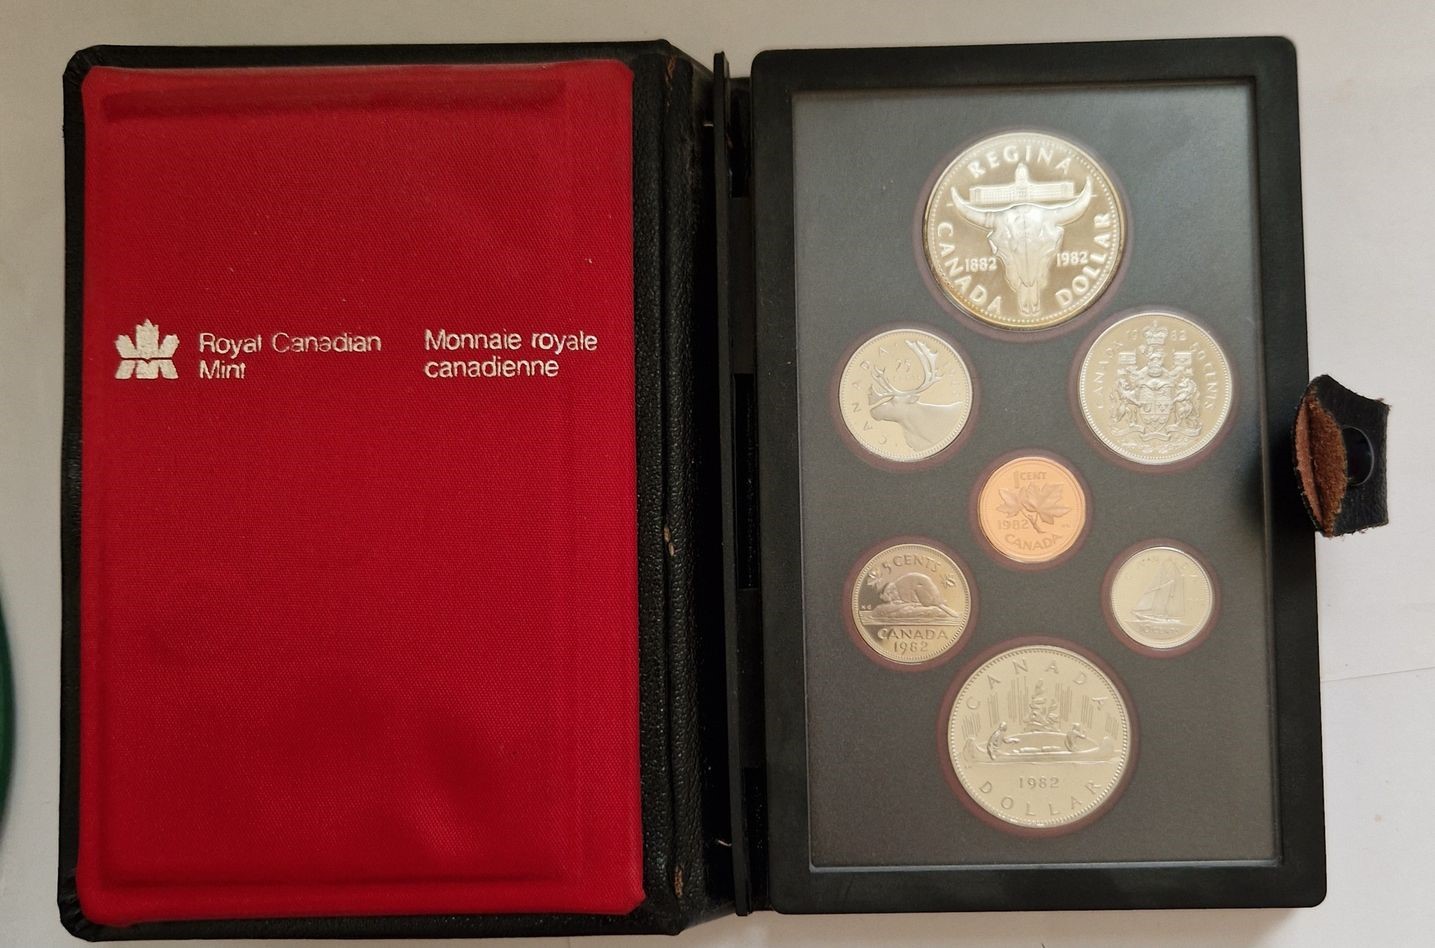  Kanada KMS 1982 1 Cent -1 Dollar Royal Canadian Mint Münzenankauf Koblenz Frank Maurer AD142   